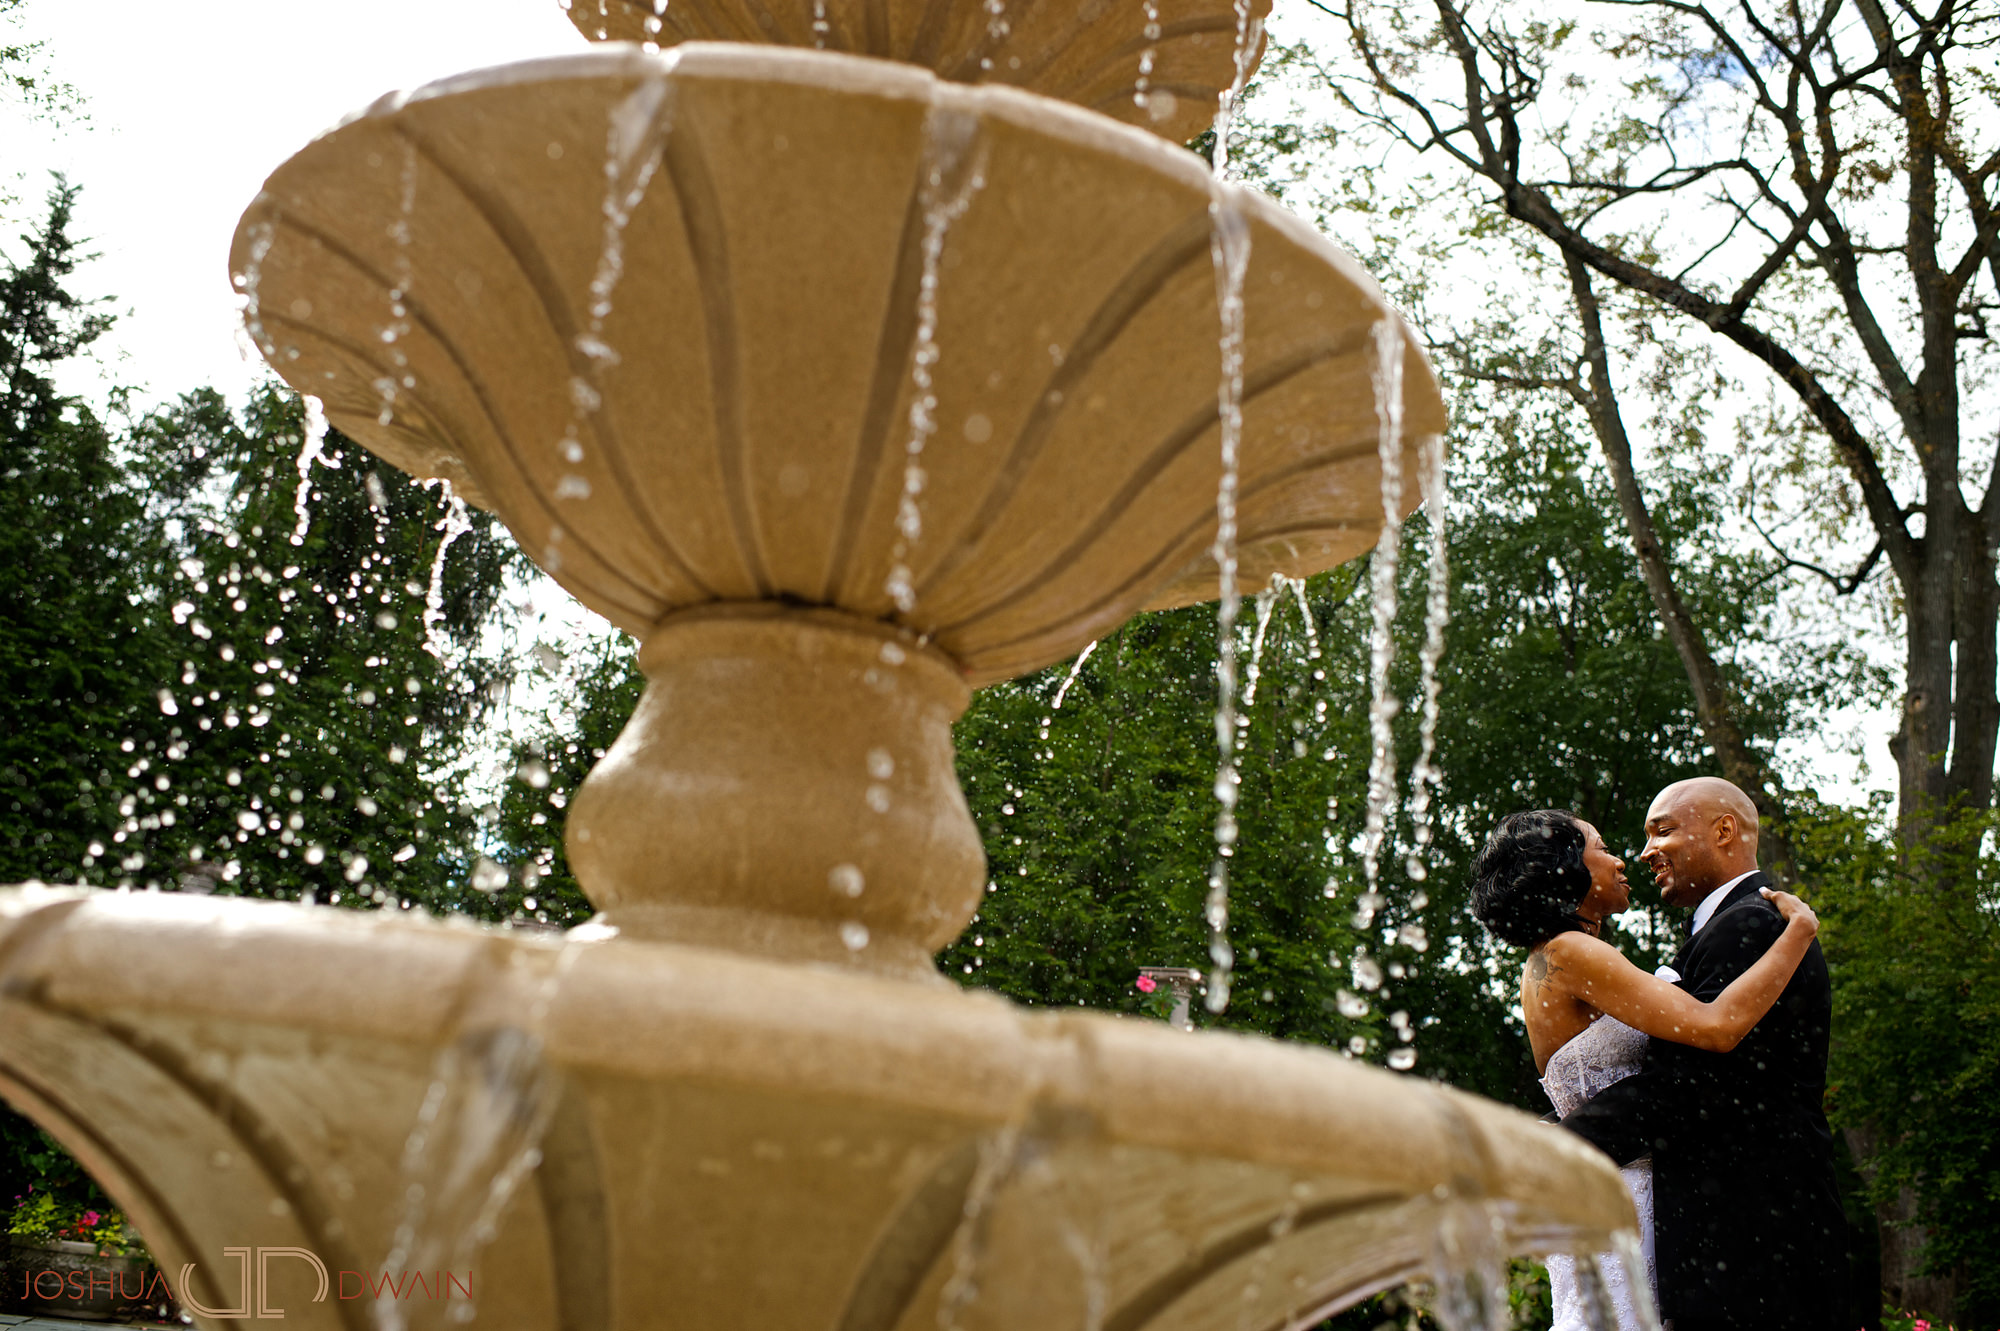 Ebone & Demez Wedding at Florentine Gardens in River vale, NJ